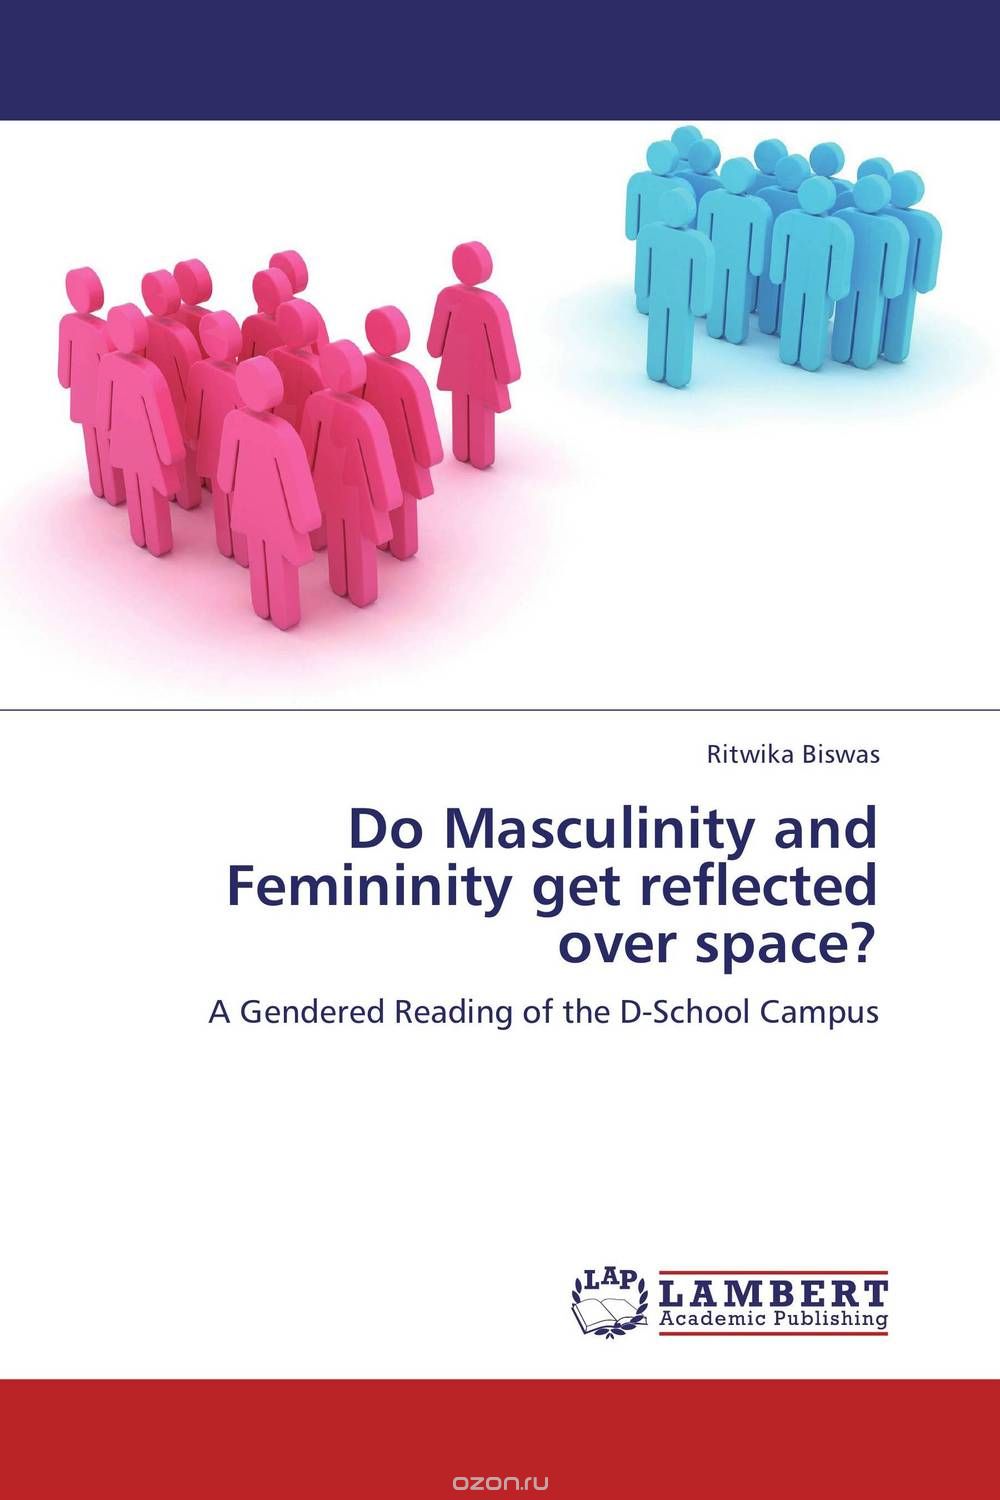 Скачать книгу "Do Masculinity and Femininity get reflected over space?"